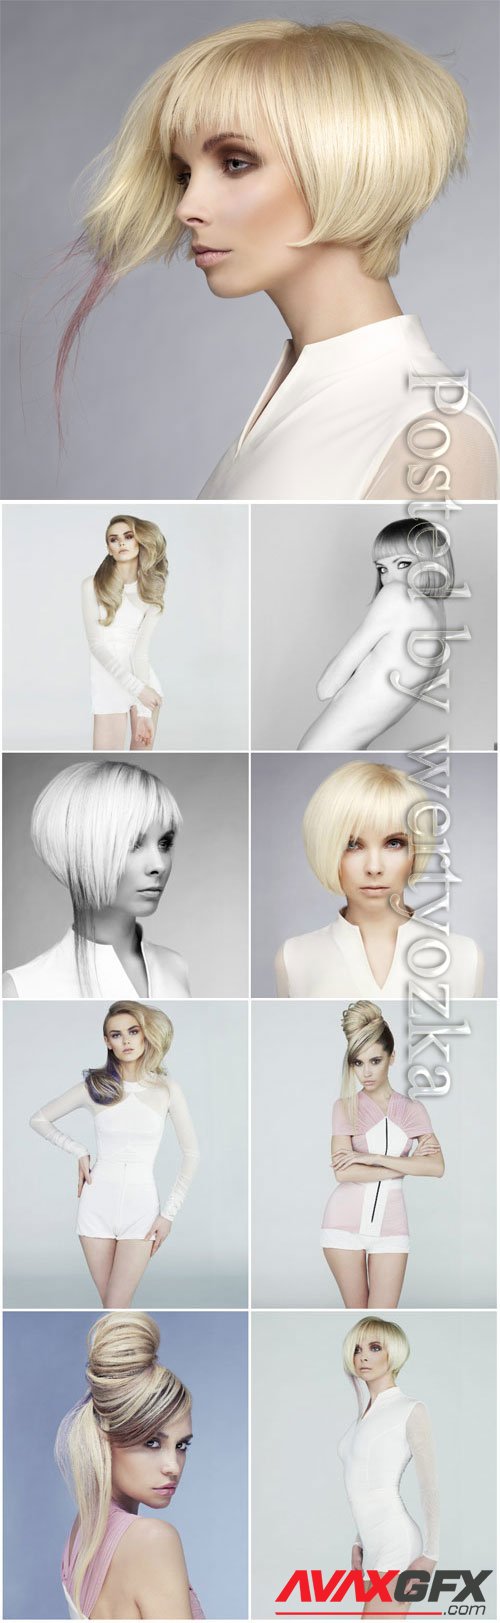 Stylish hairstyles for fashionable girls stock photo